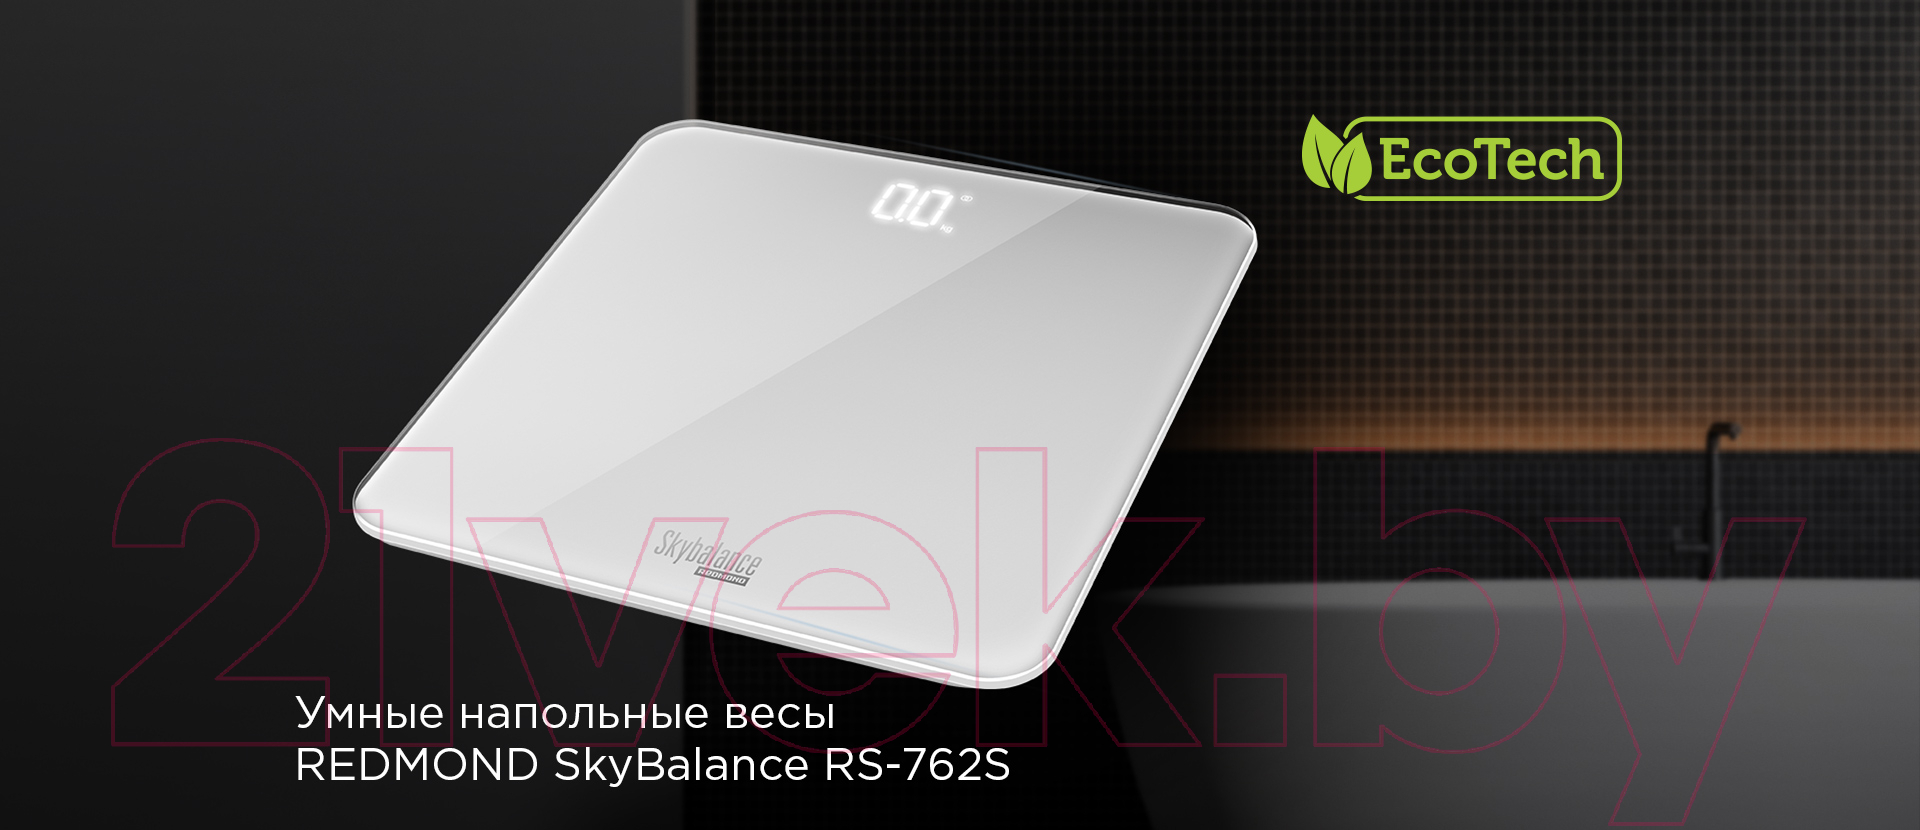 Напольные весы электронные Redmond Skybalance RS-762S